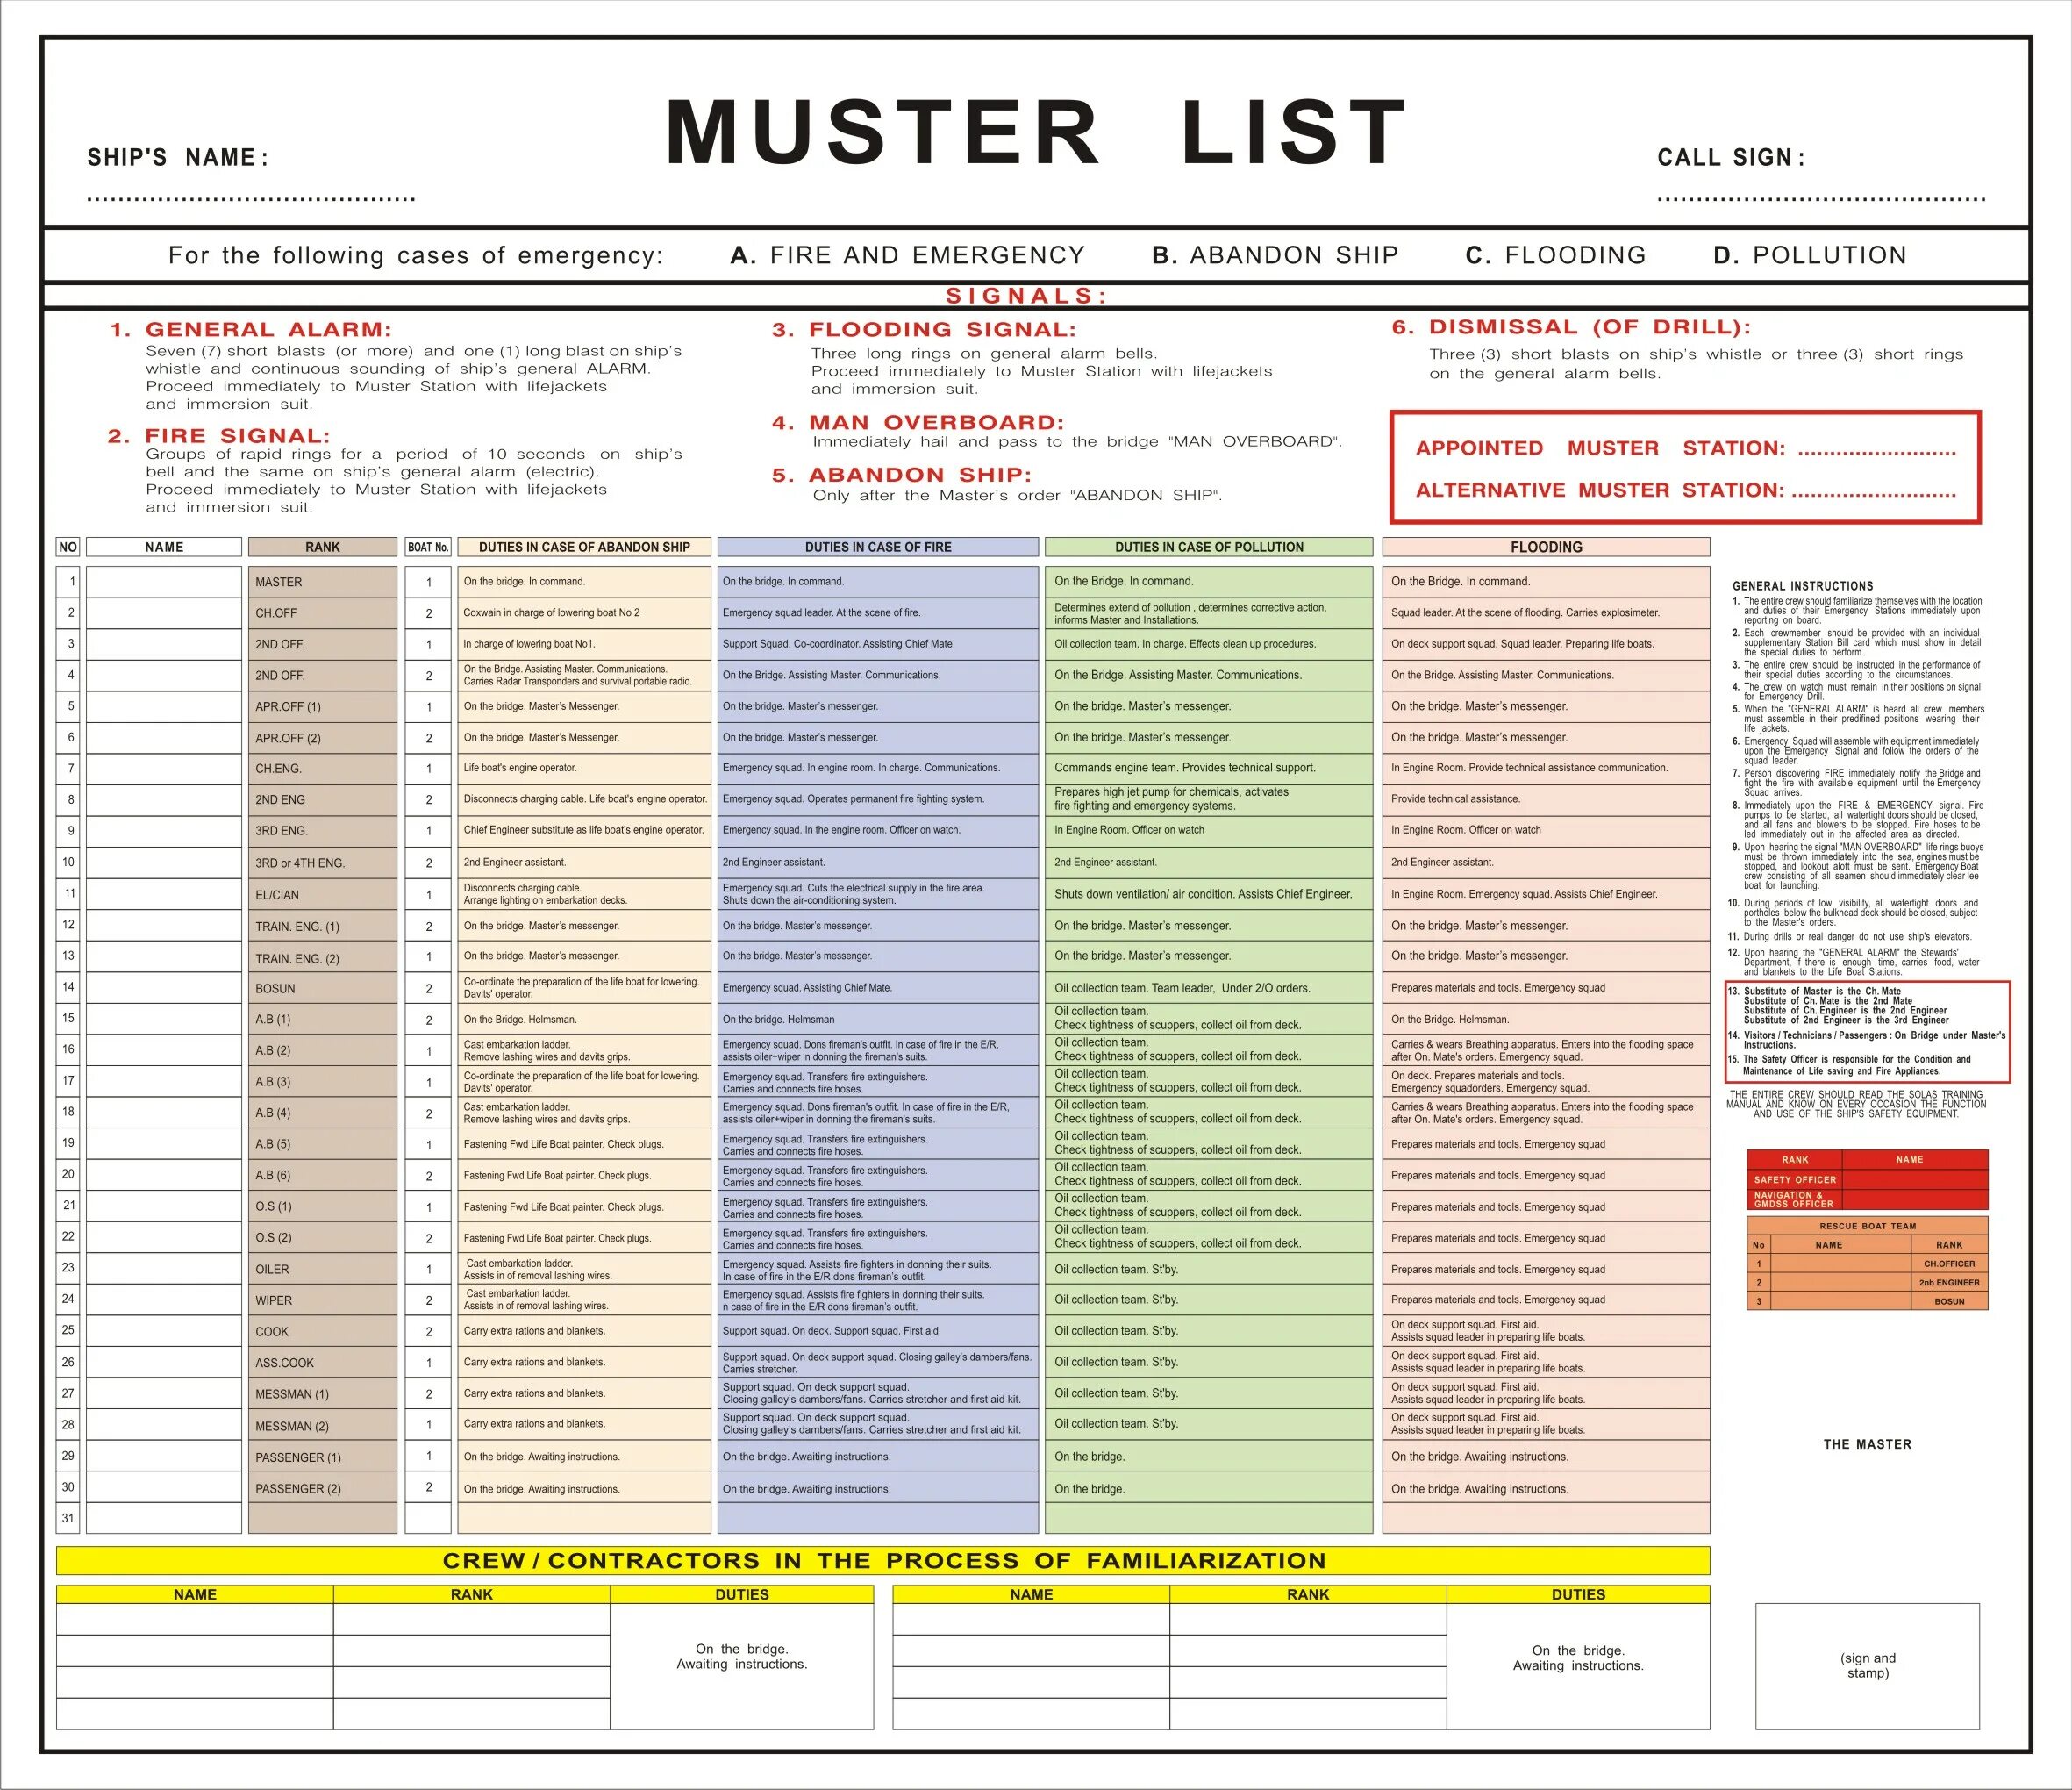 Ships list. Muster list. Master list на судне. Muster list расписание по тревогам. Muster list on ship.